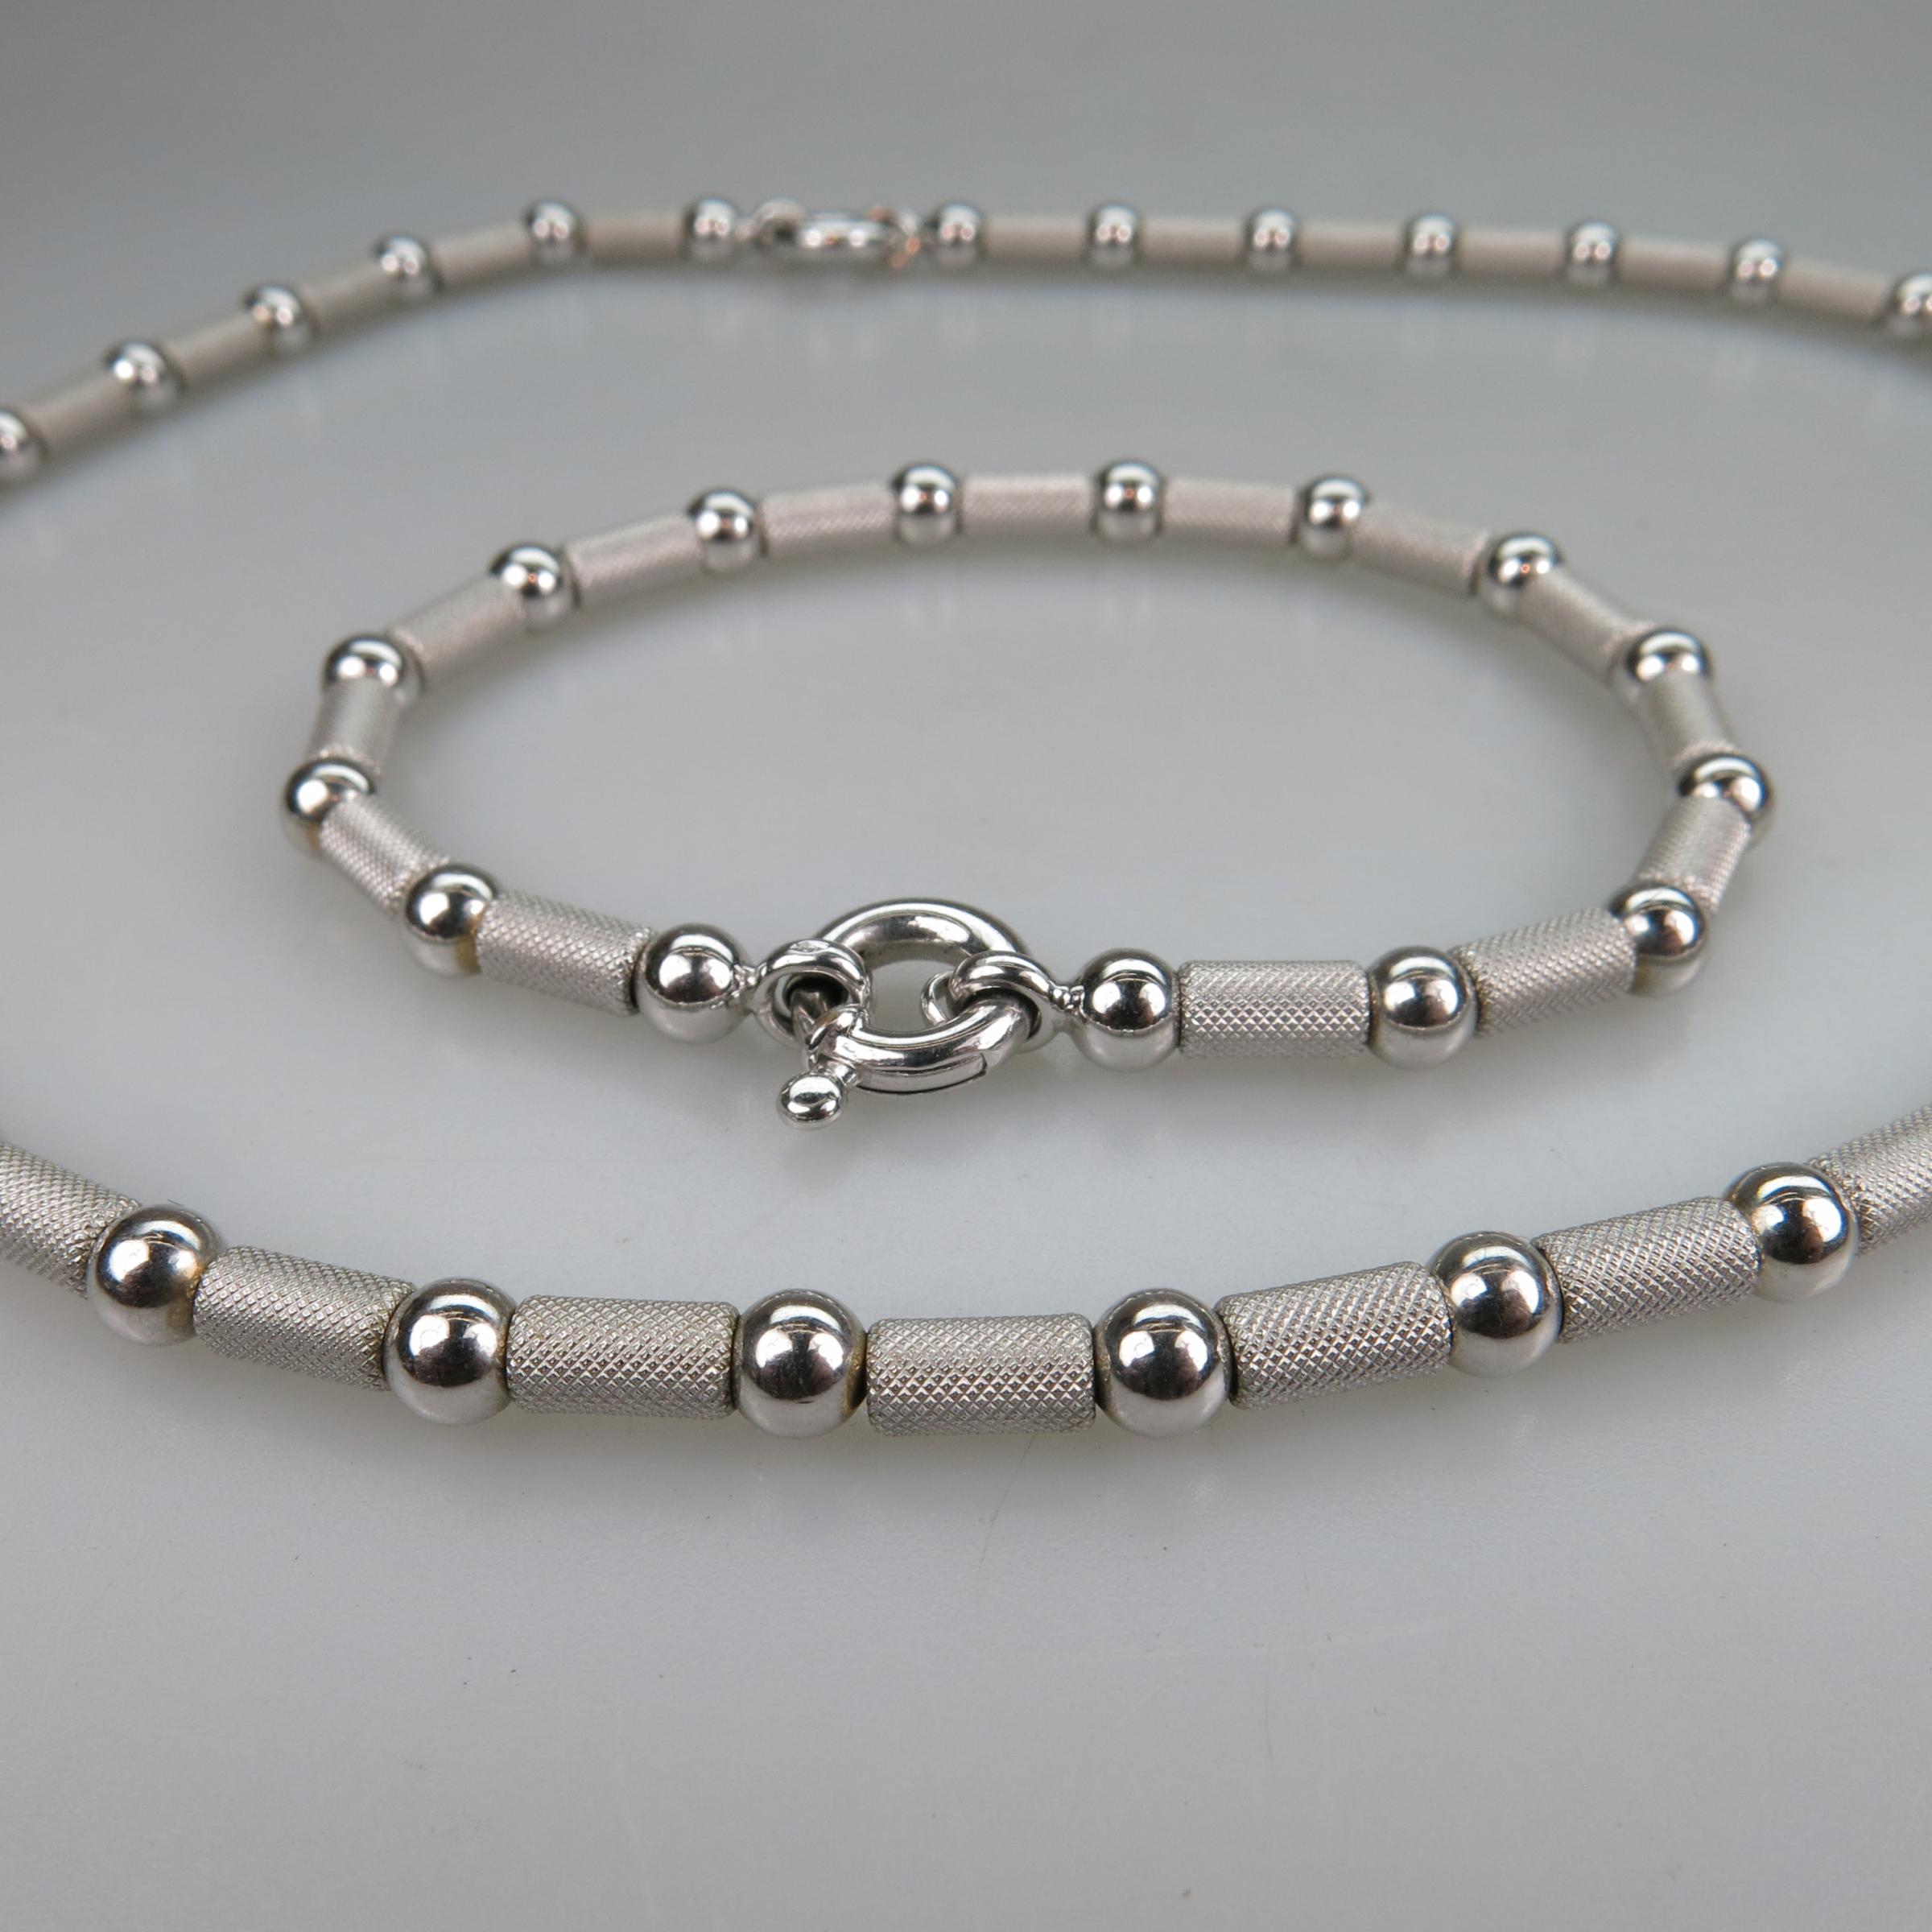 Birks 18k White Gold Necklace And A Matching Bracelet